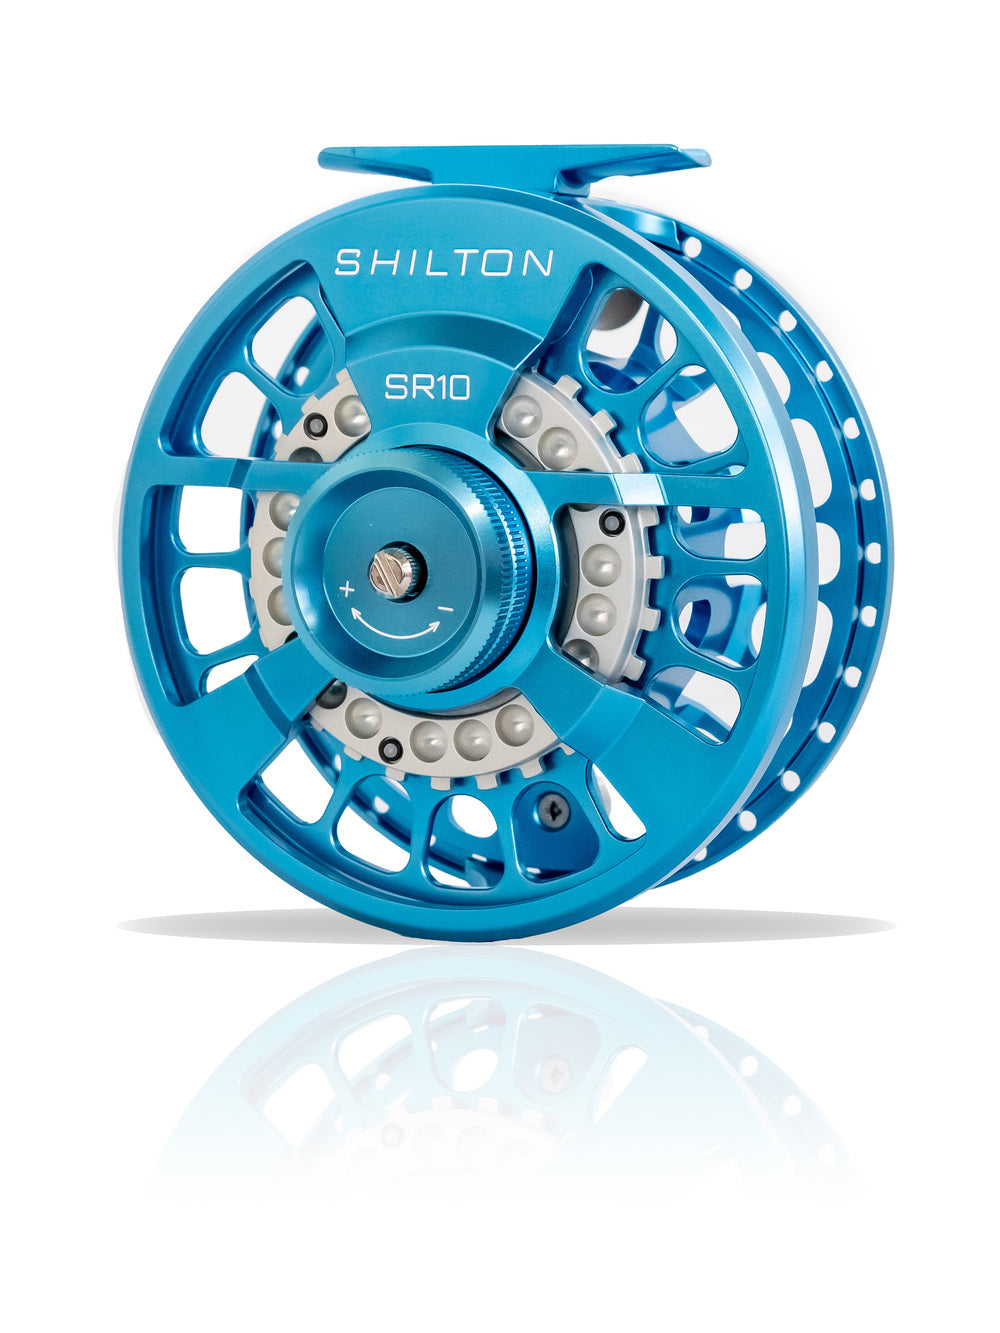 Shilton SR10 Reels (10-11wt) in Turquoise